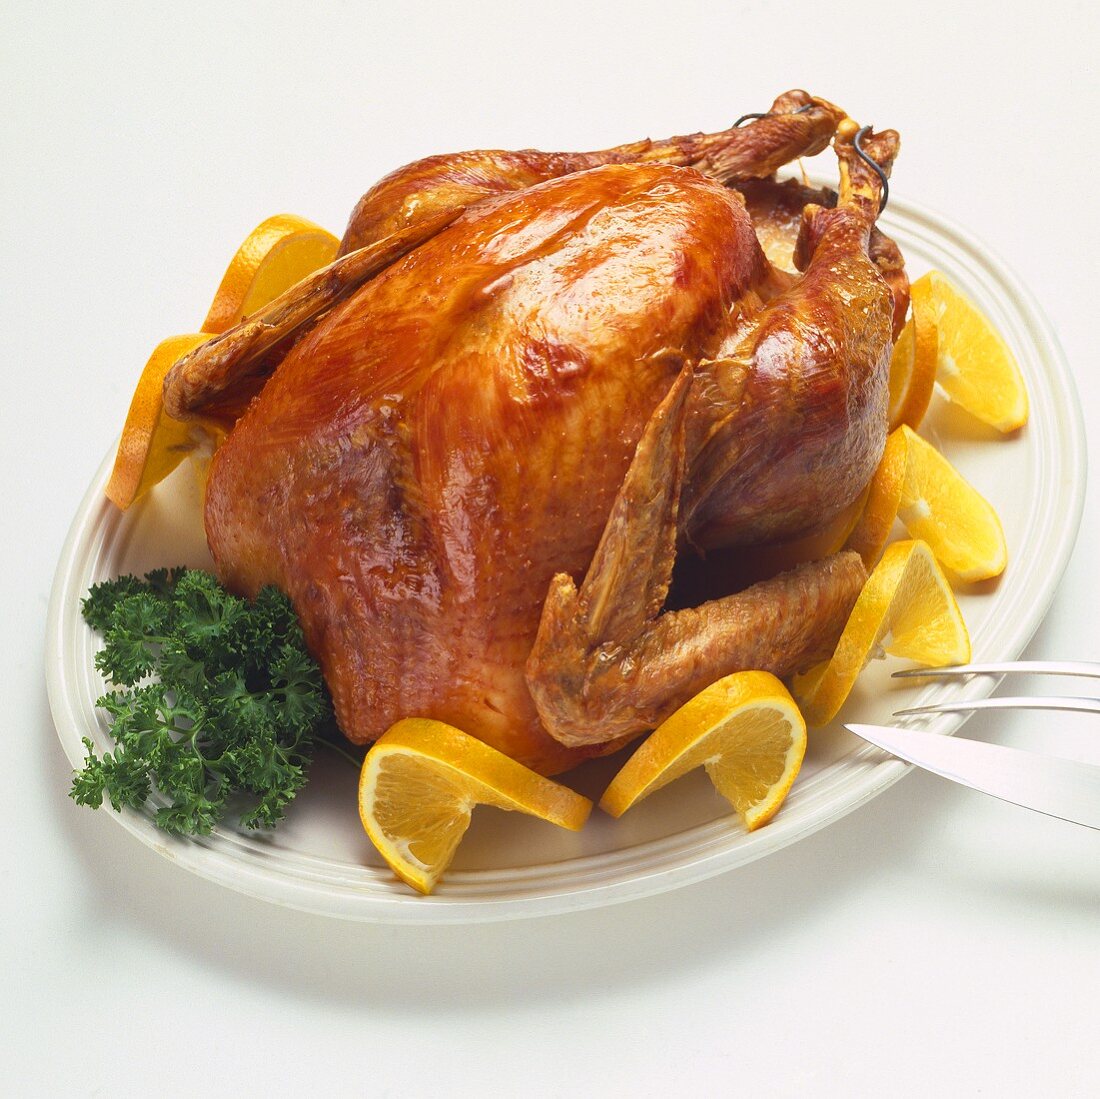 Whole Roast Turkey with Orange Slice Garnishes on a Platter; Carving Set